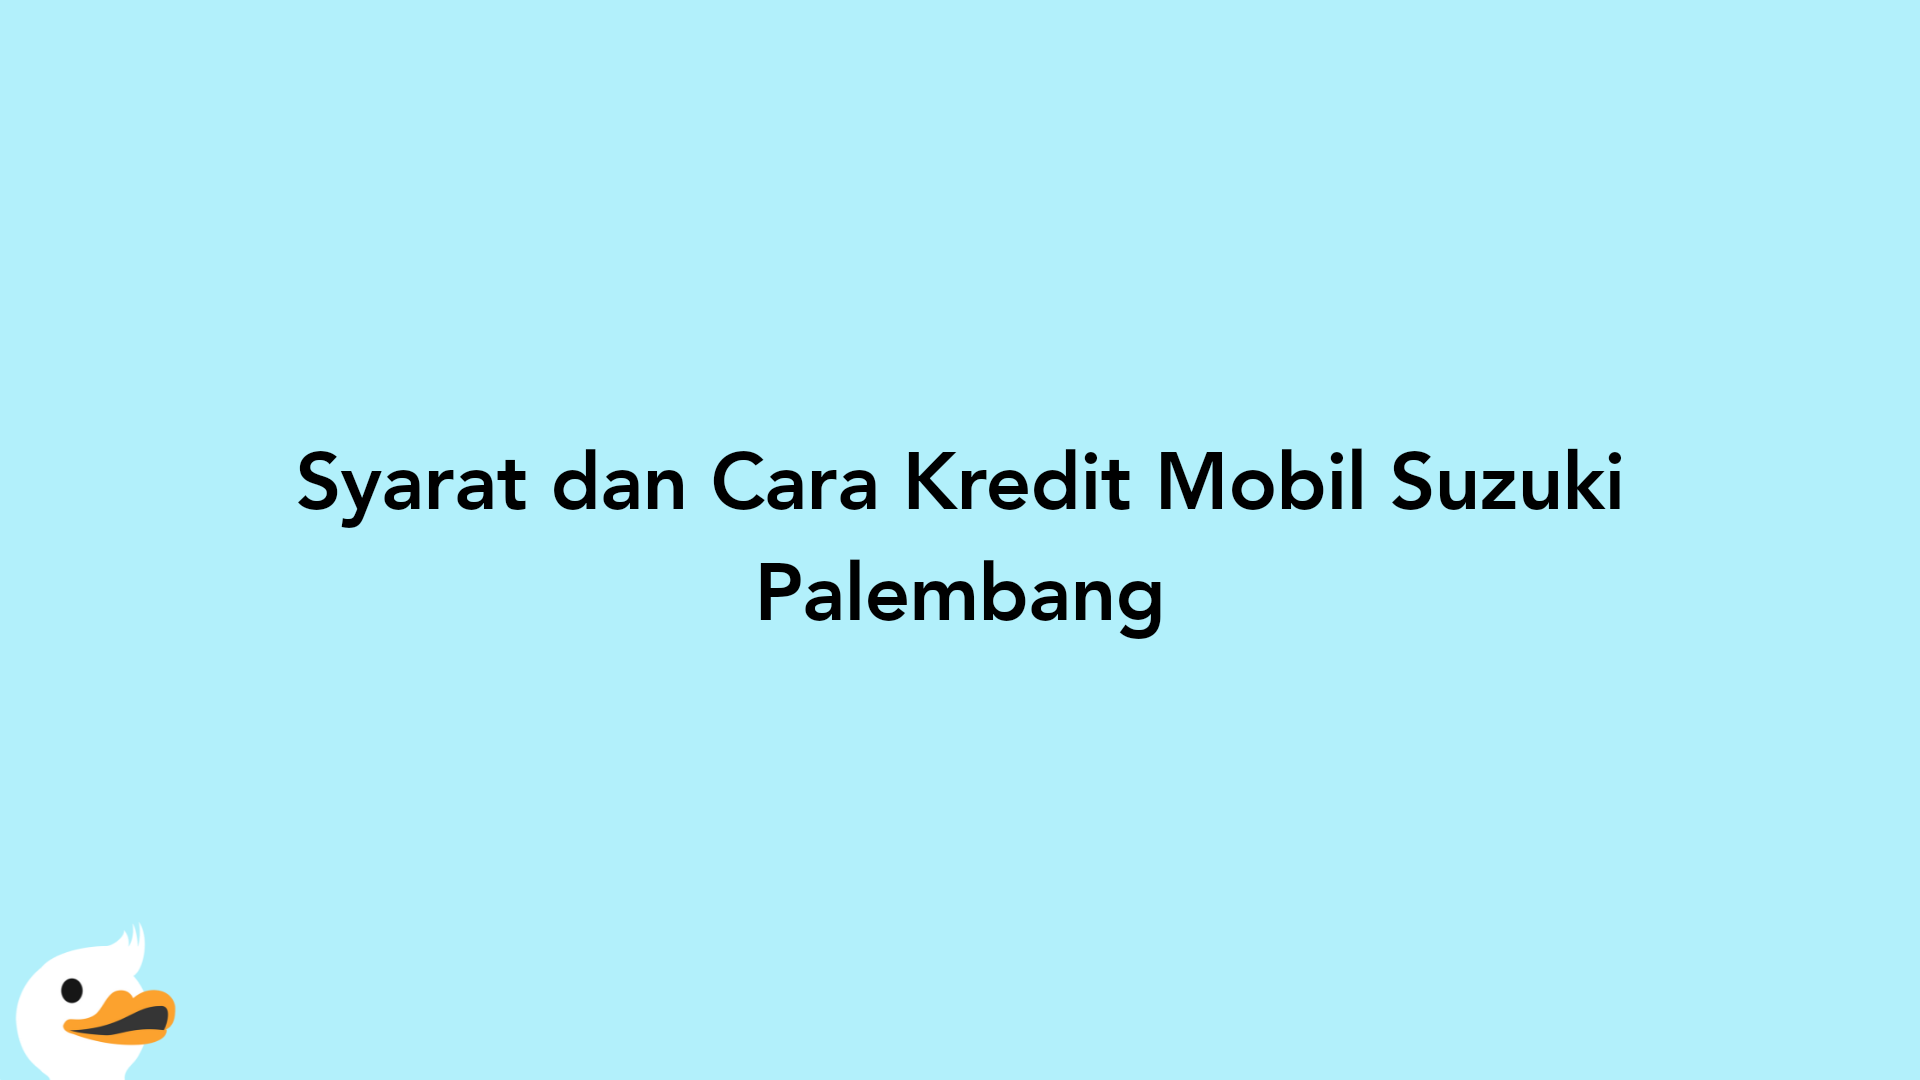 Syarat dan Cara Kredit Mobil Suzuki Palembang